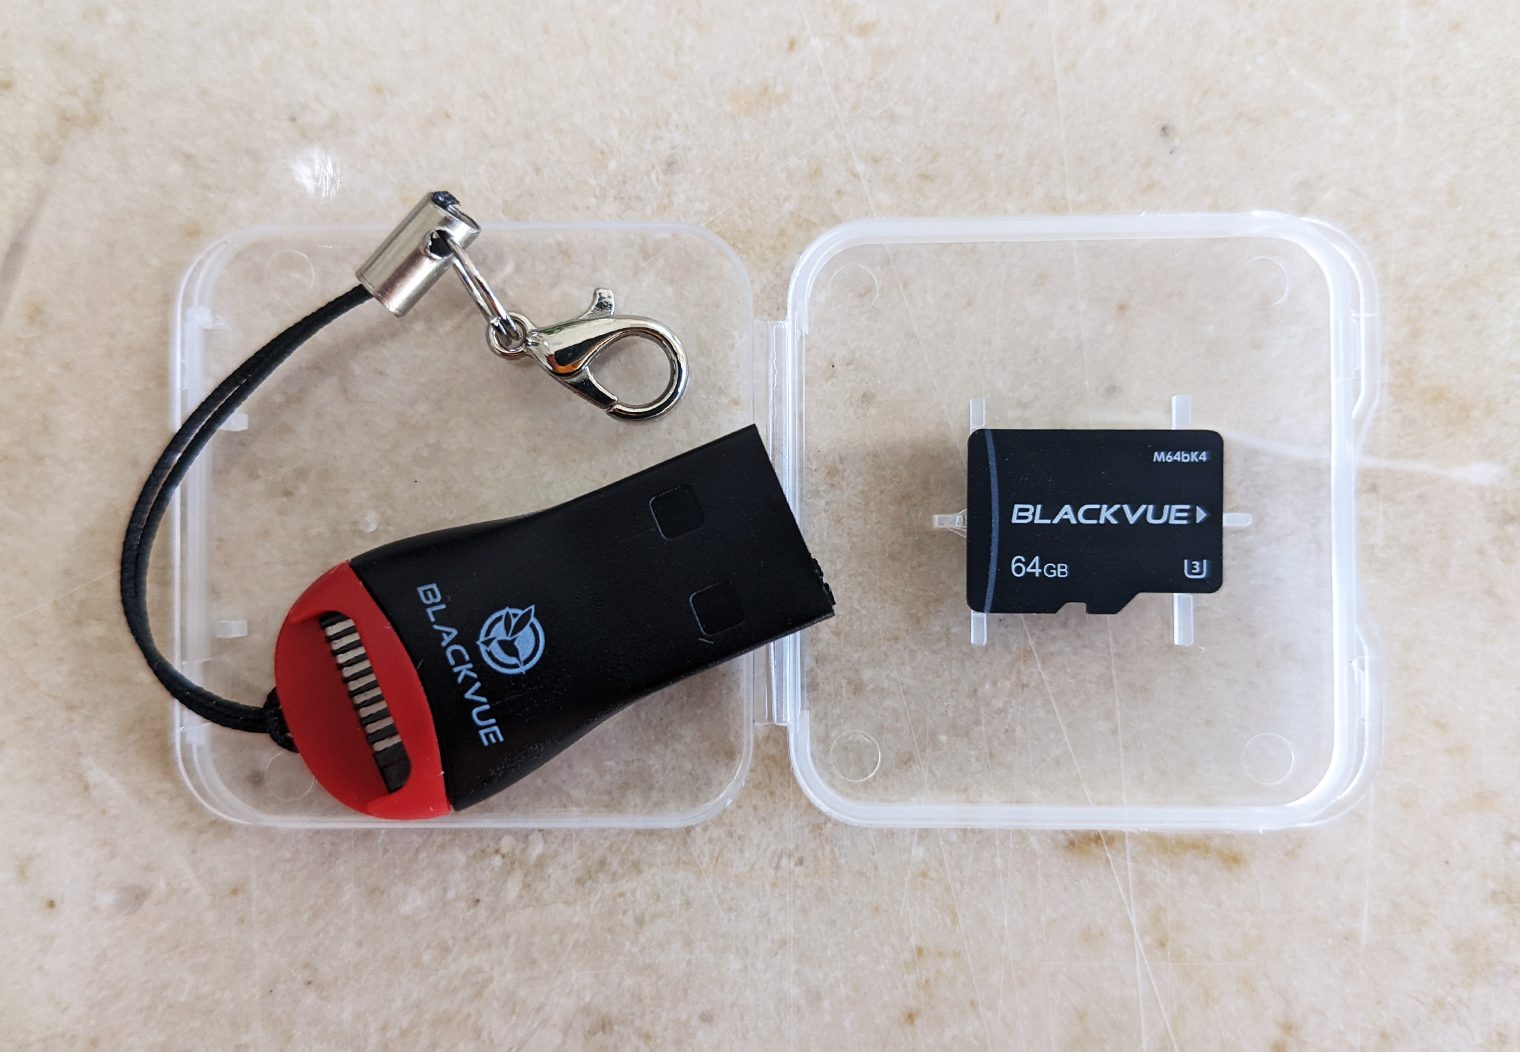 BlackVue microSD Card Reader closeup